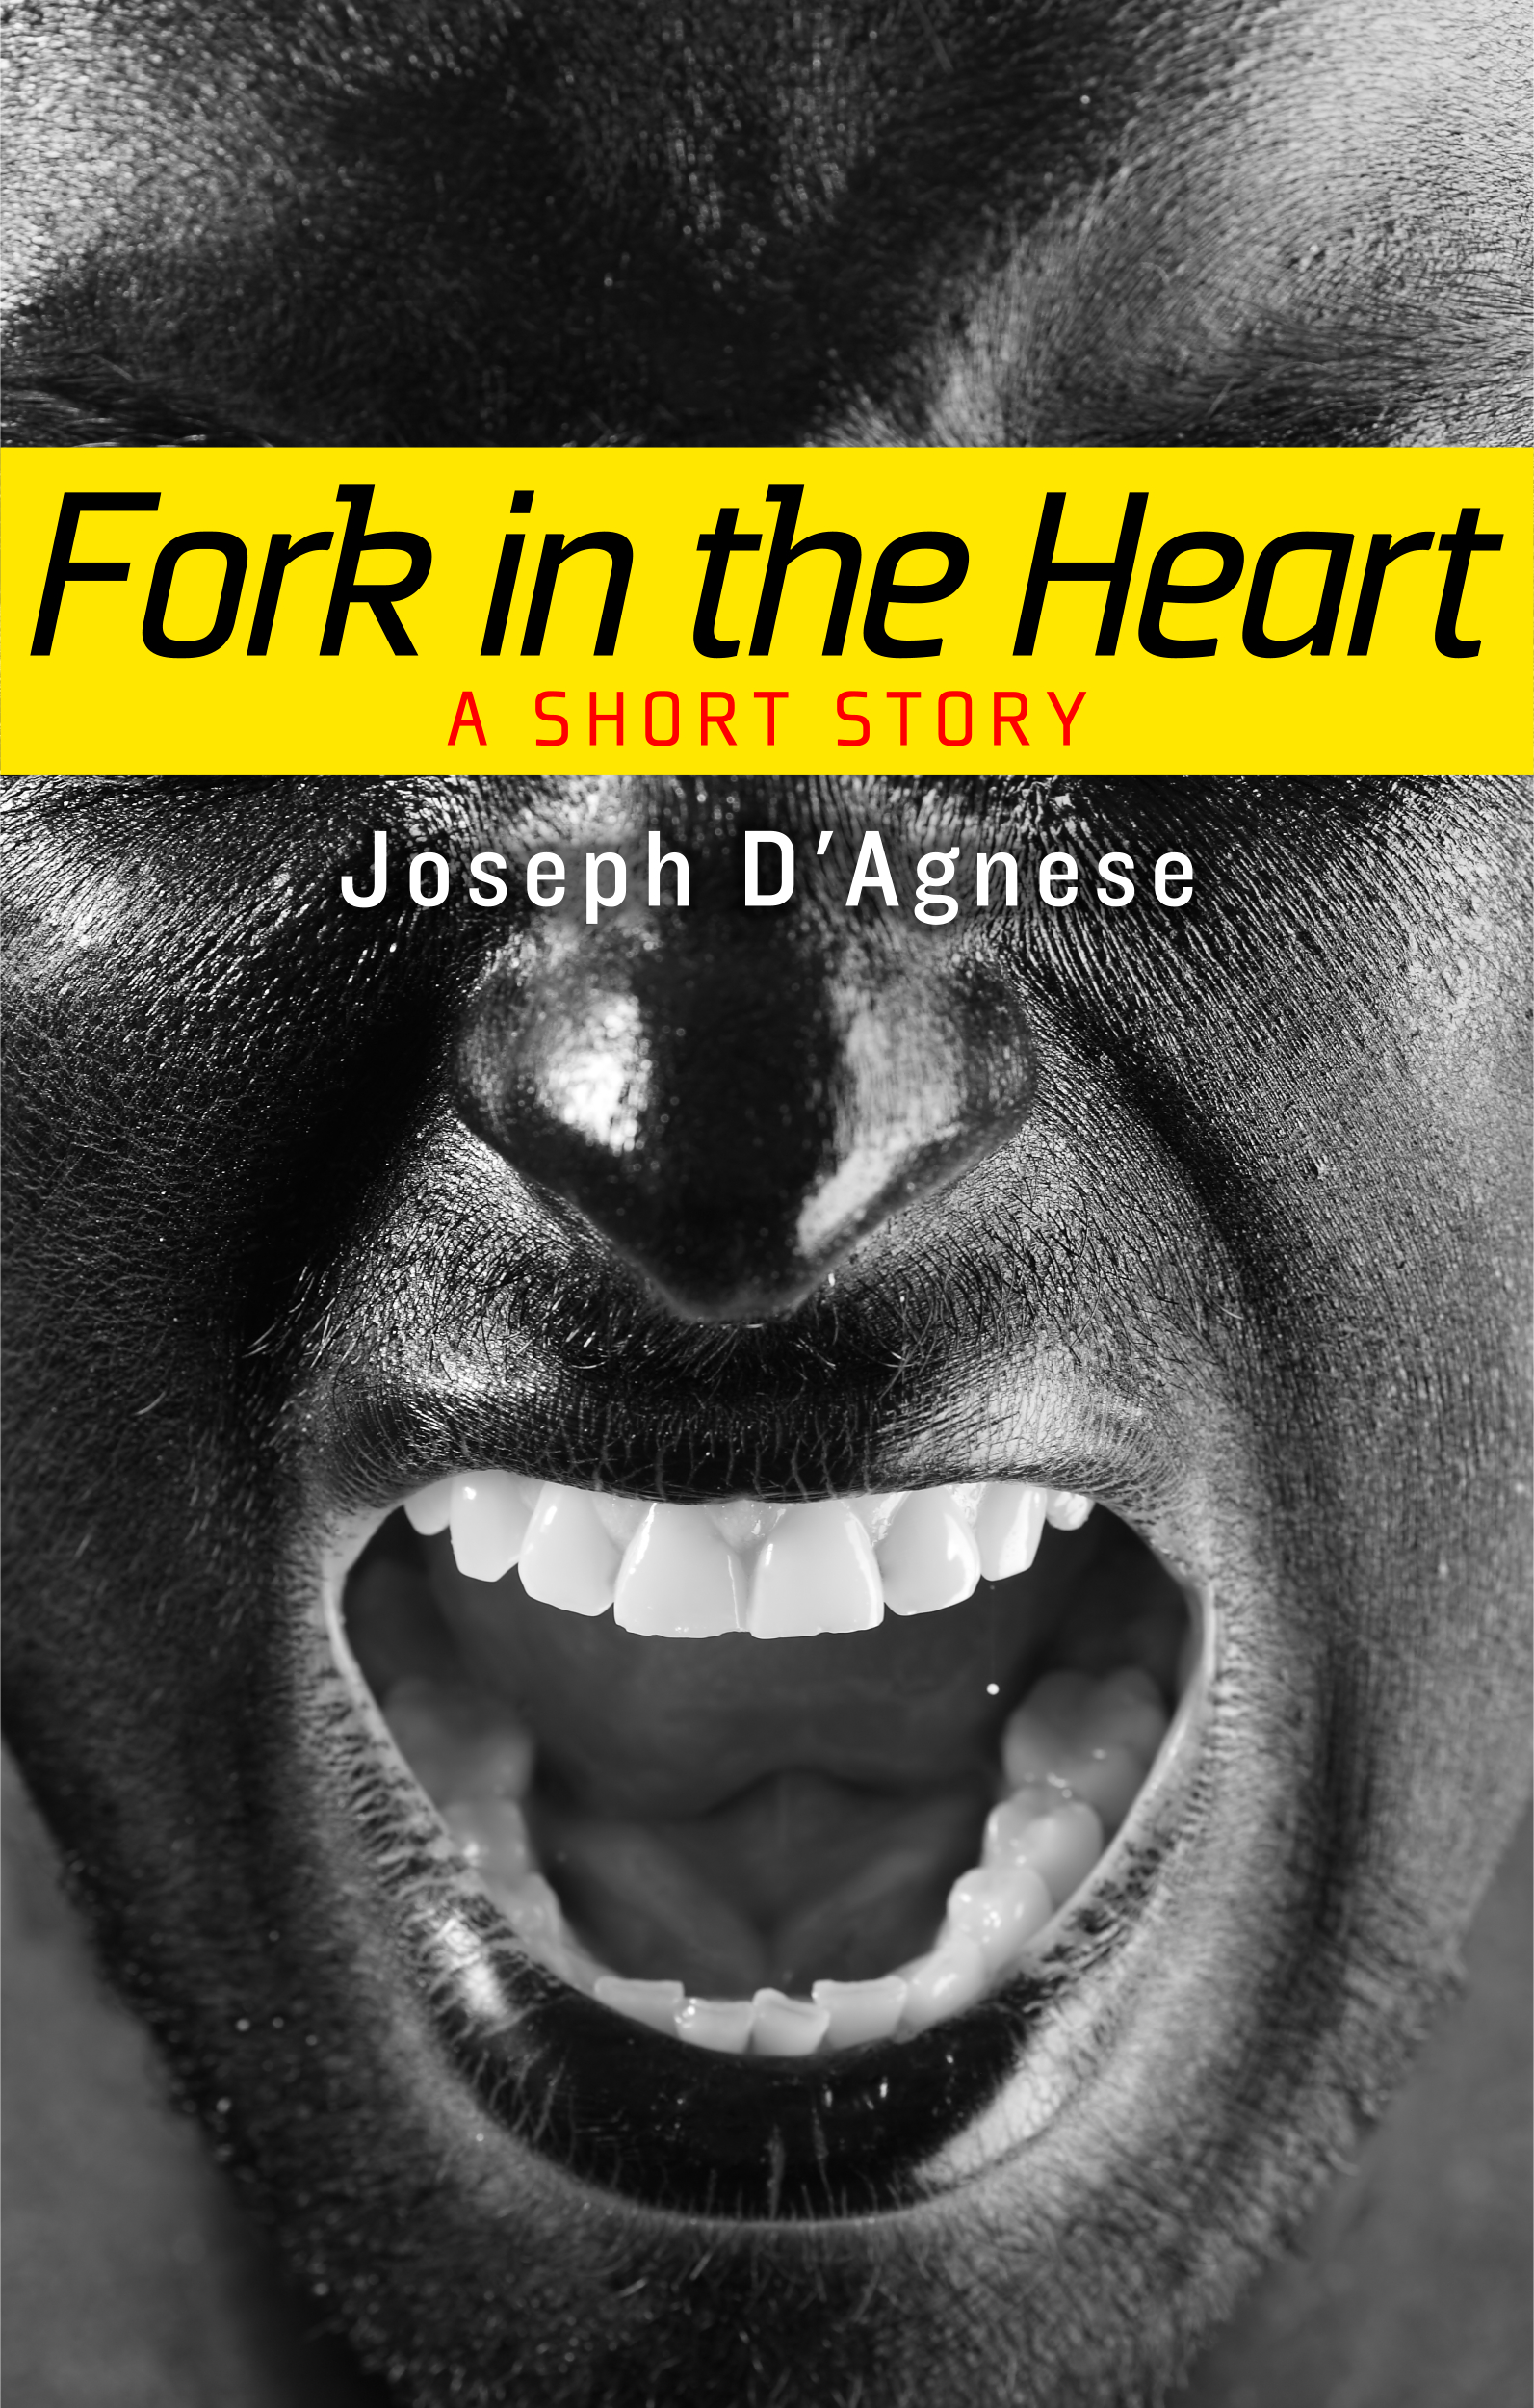 Fork in the Heart by Joseph D'Agnese